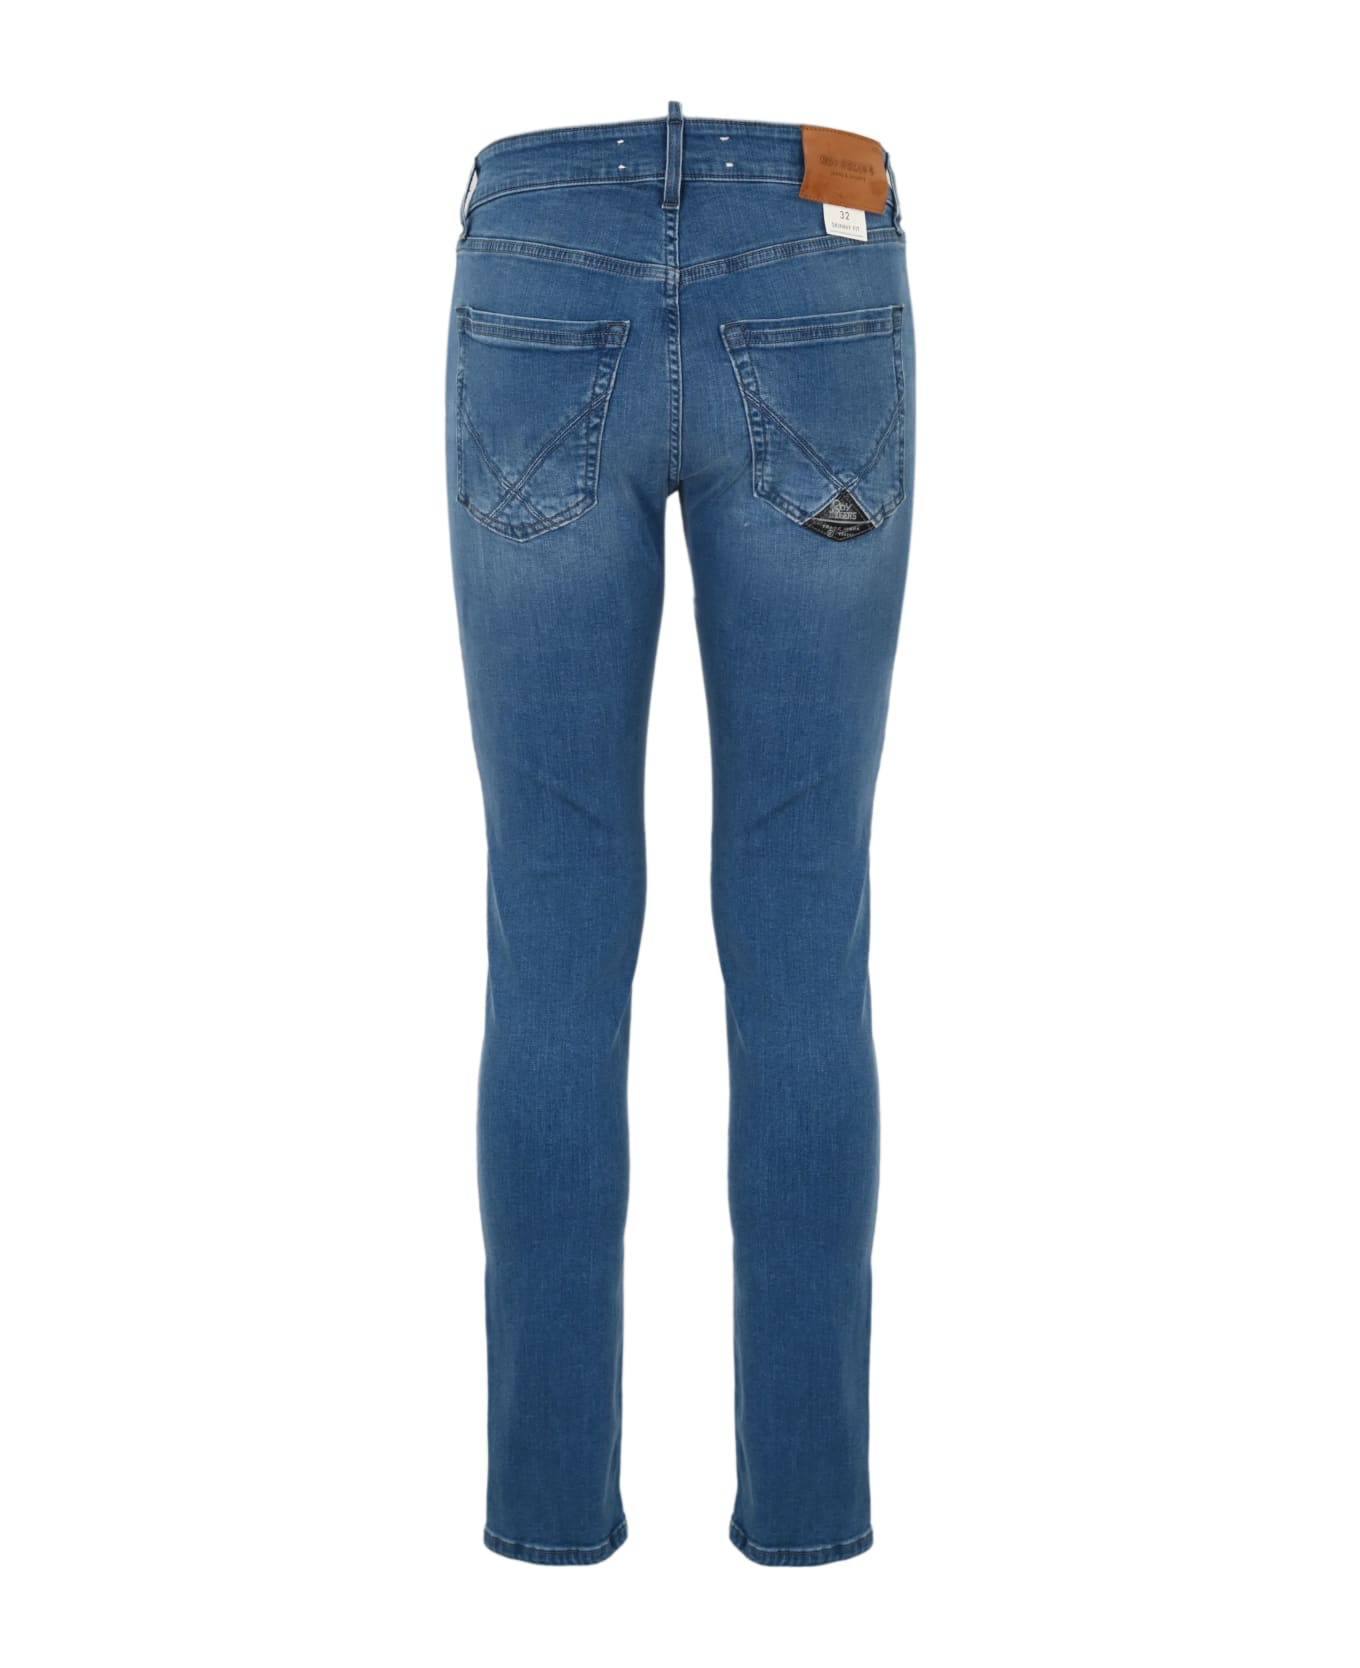 Roy Rogers 317 Denim Jeans - Denim